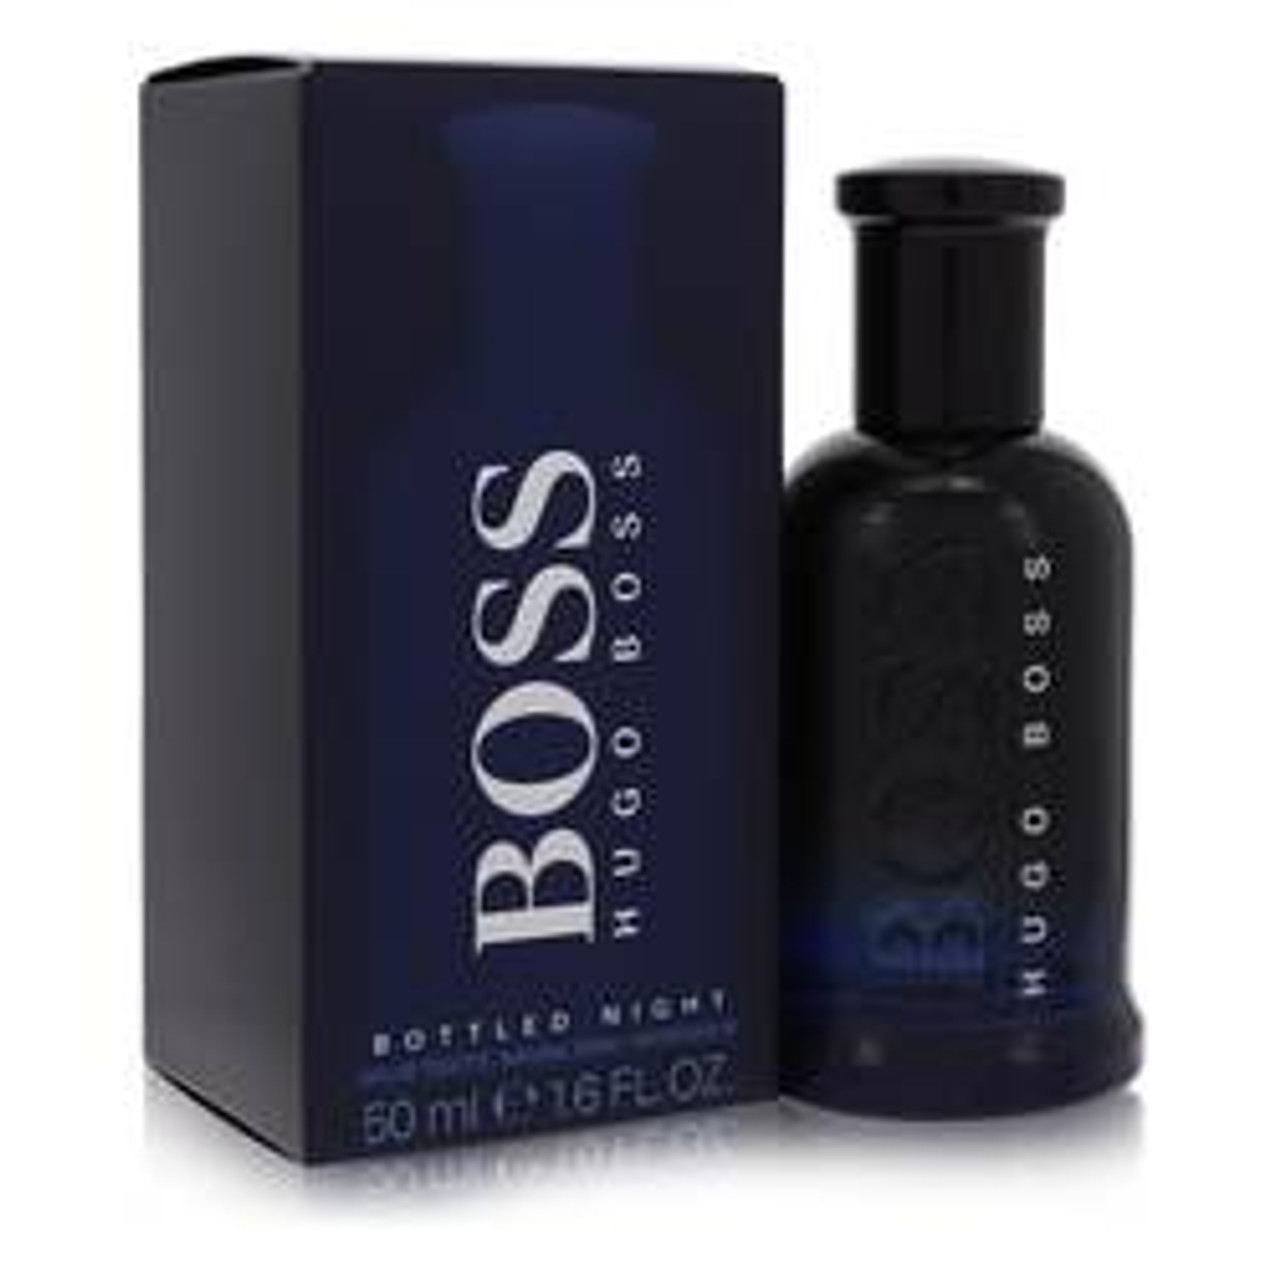 Boss Bottled Night Cologne By Hugo Boss Eau De Toilette Spray 1.7 oz for Men - [From 152.00 - Choose pk Qty ] - *Ships from Miami